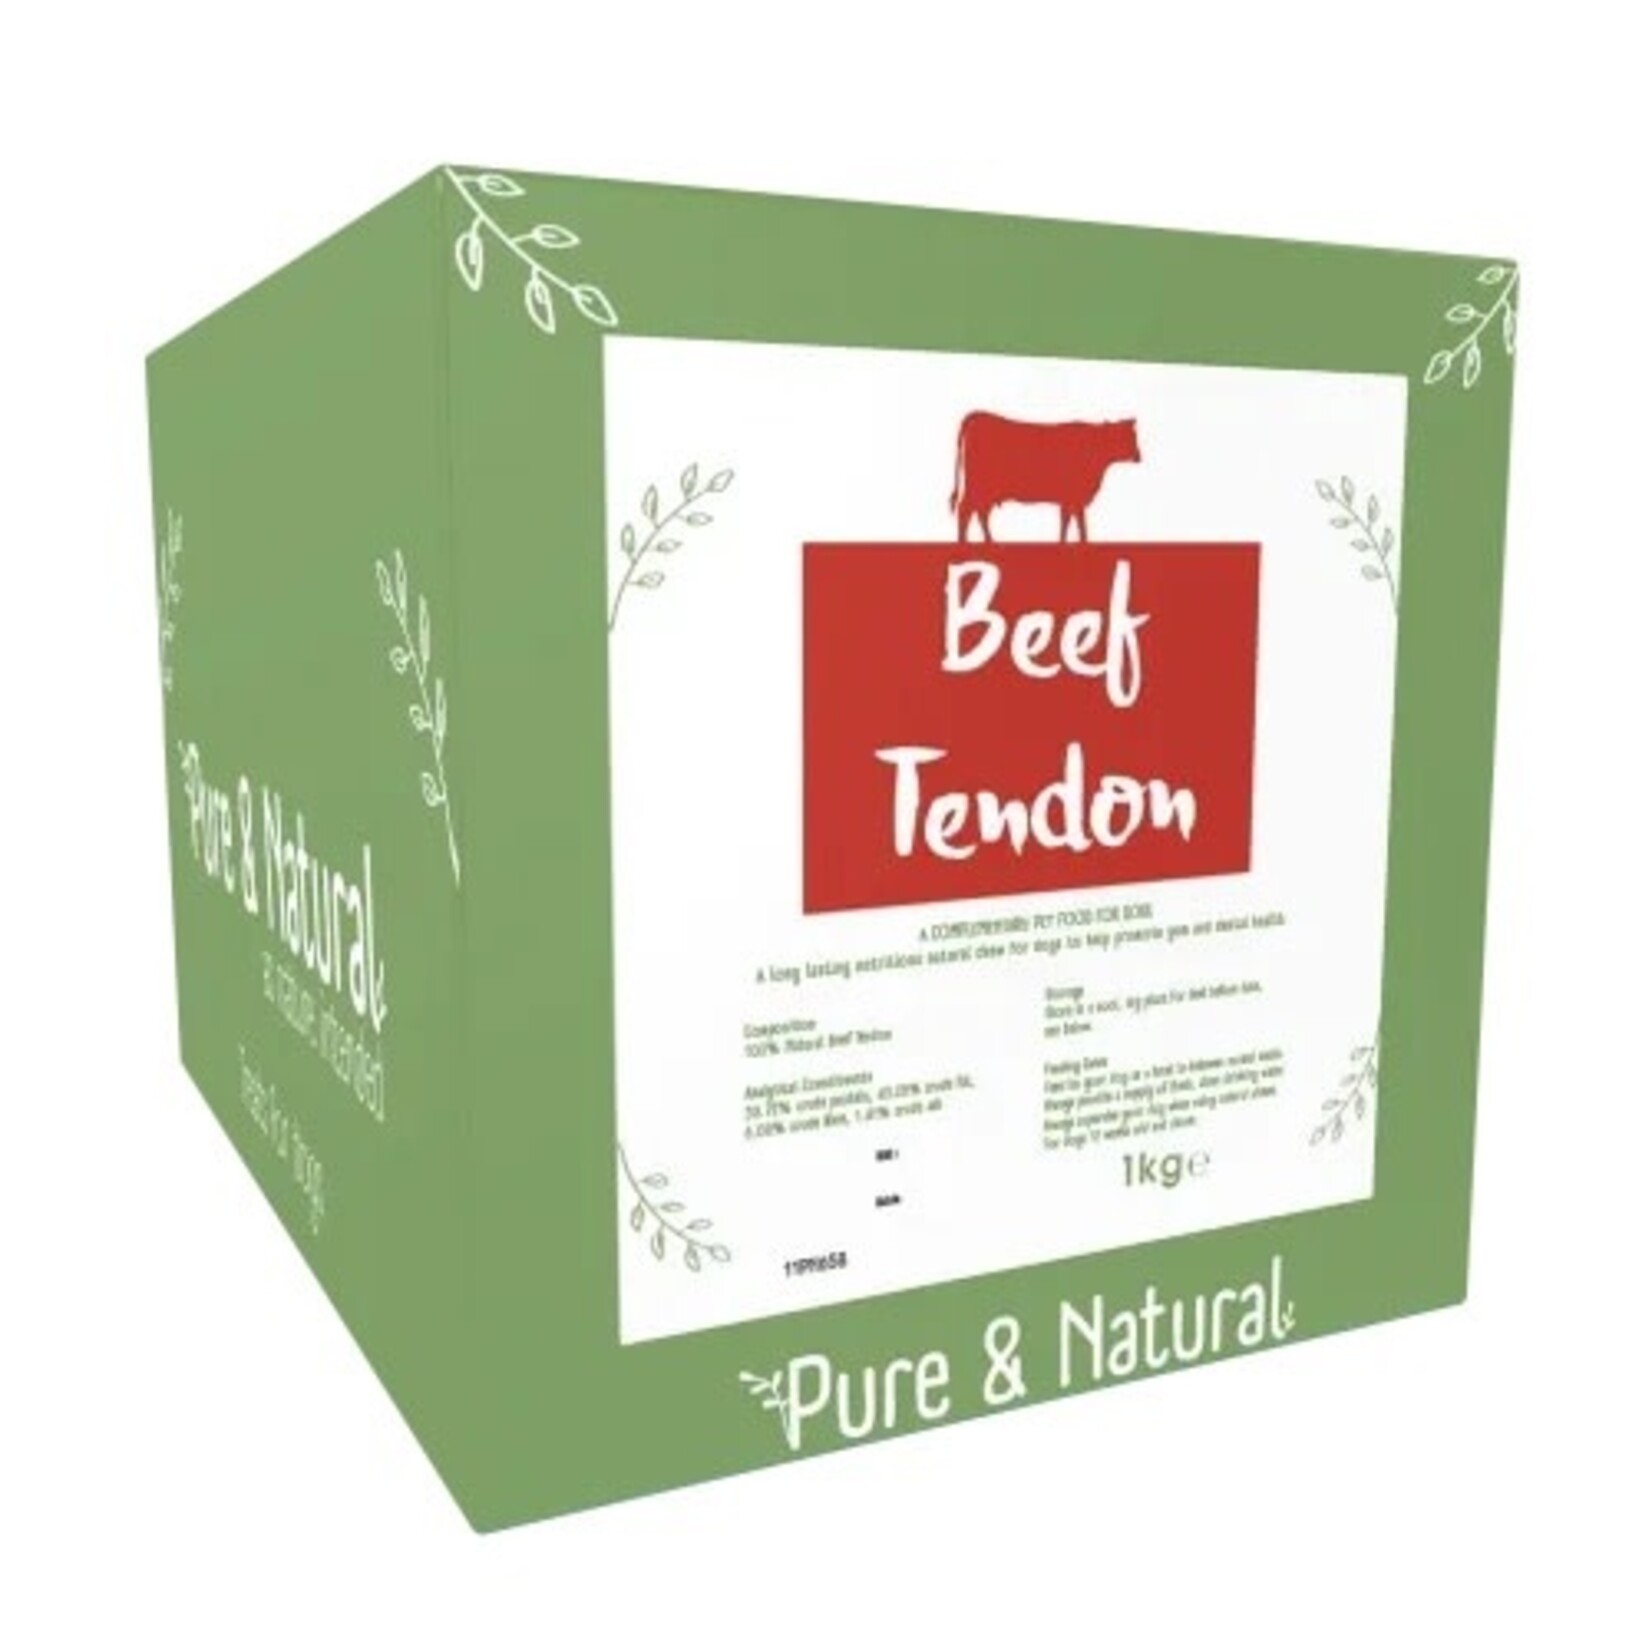 Pure & Natural Beef Tendon Dog Treats, 1kg Box